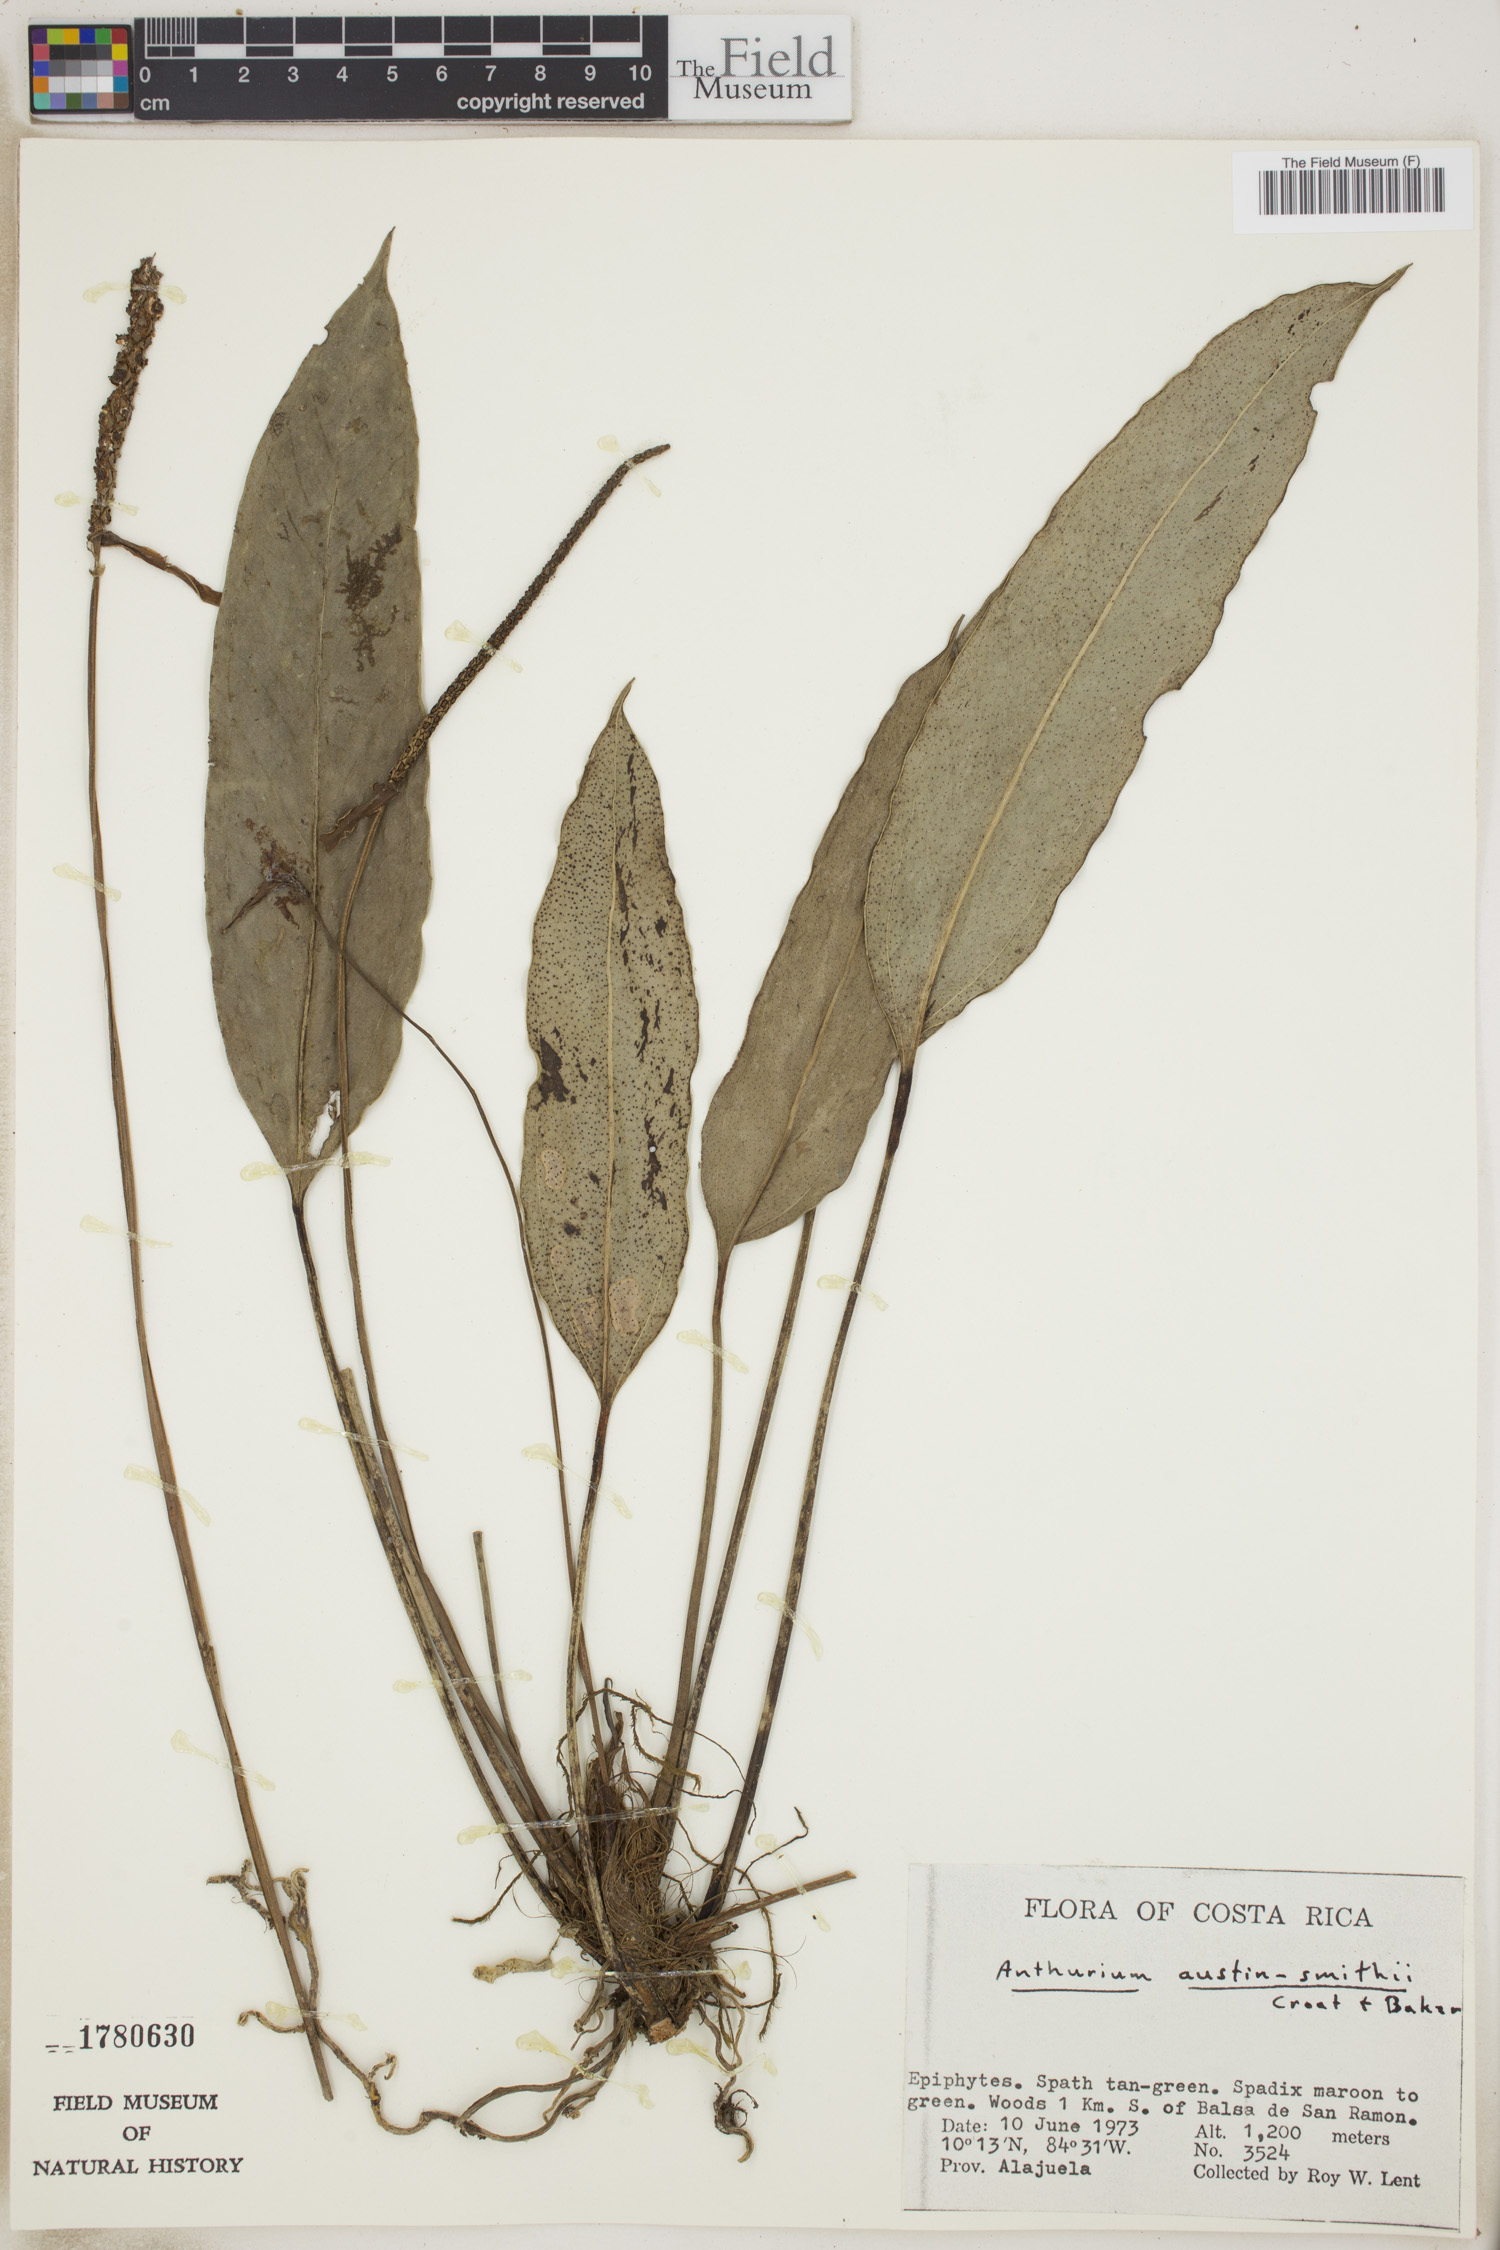 Anthurium austin-smithii image